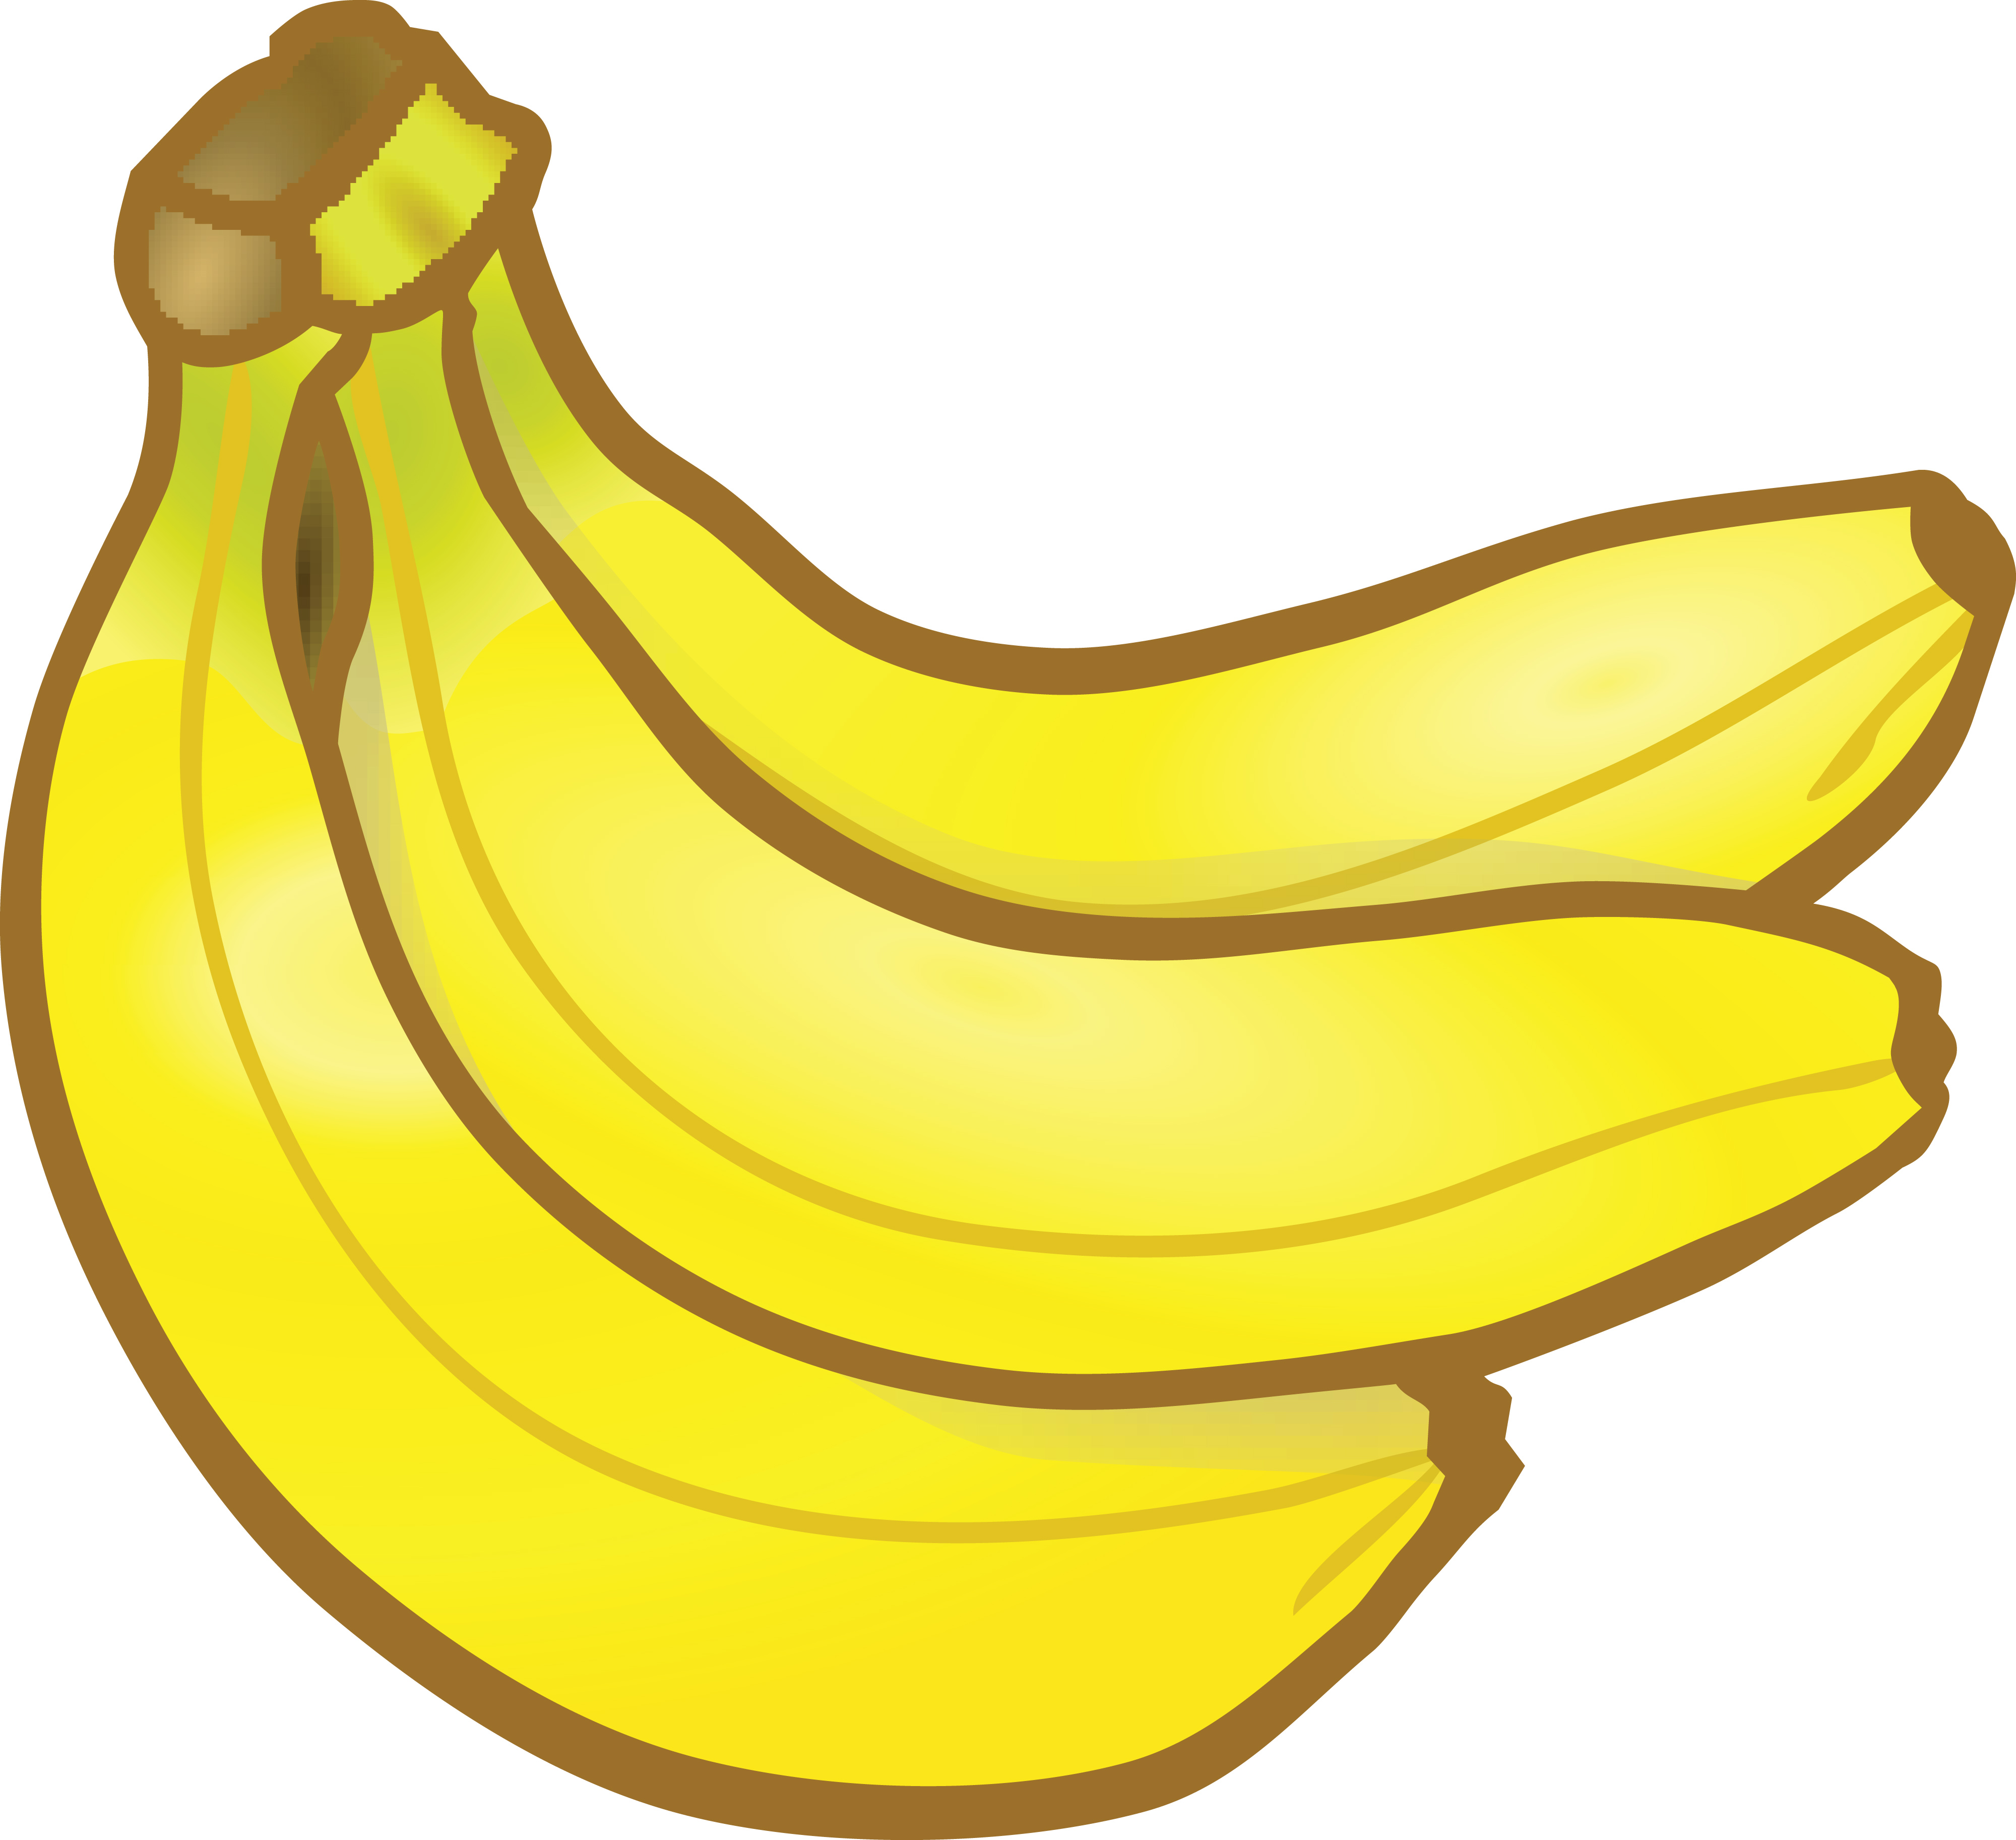 Horizontal banana clip art. Bananas clipart vector